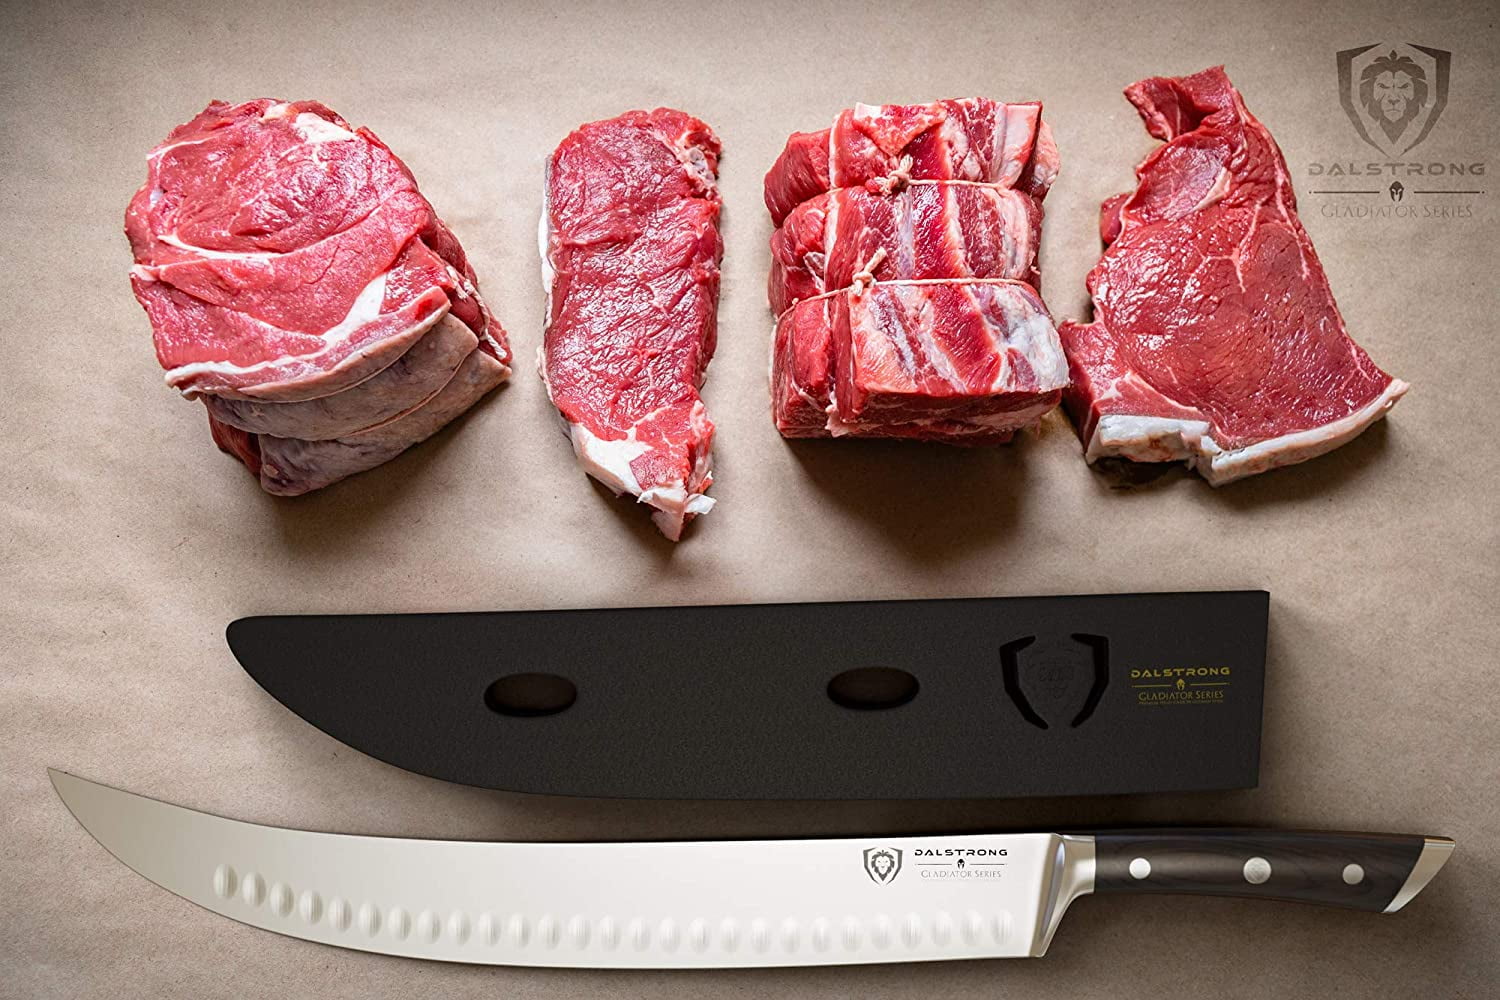 Dalstrong Butcher Knife - 14 inch - Gladiator Series - Cimitar Breaking Knife - Forged High-Carbon German Steel Kitchen Knife - Razor Sharp - Sheath